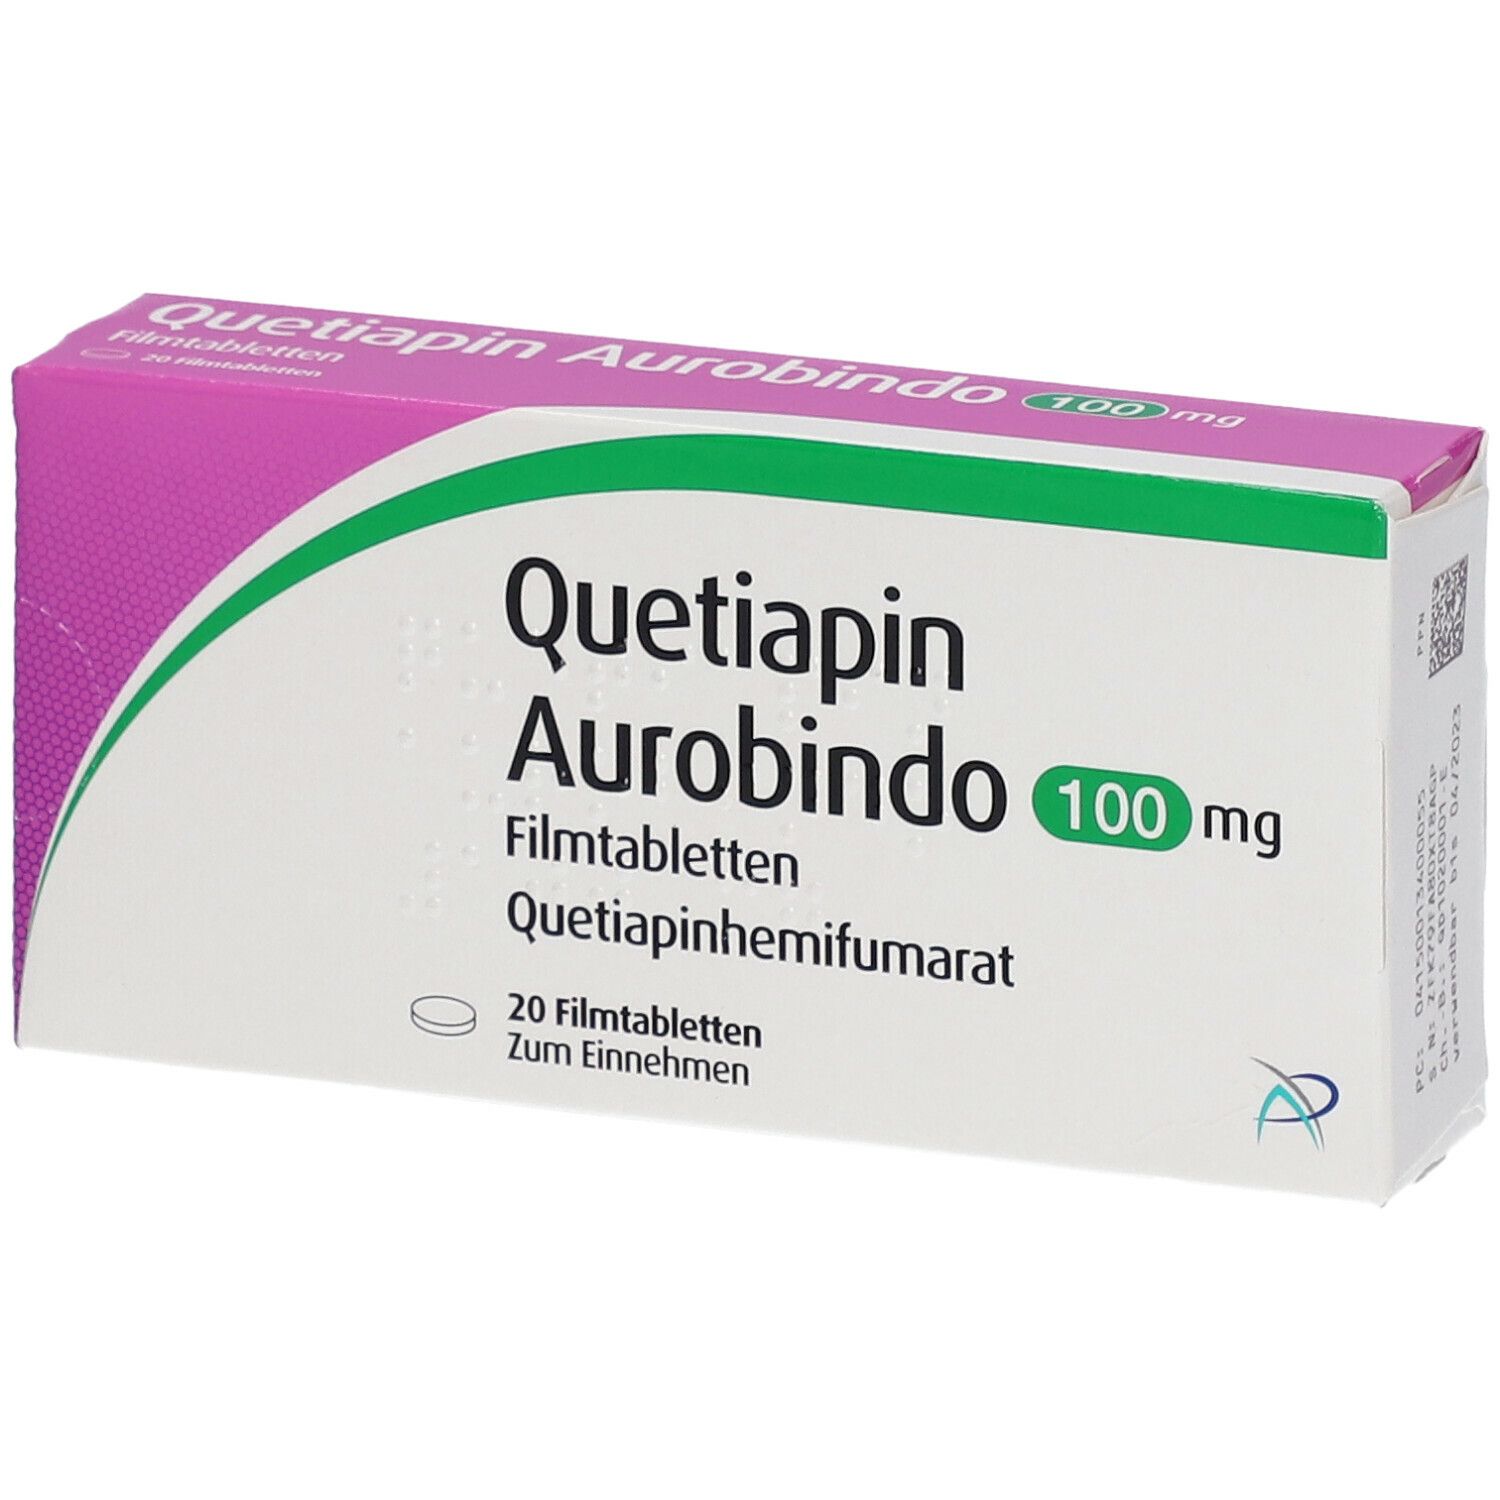 Quetiapin Aurobindo 100 mg